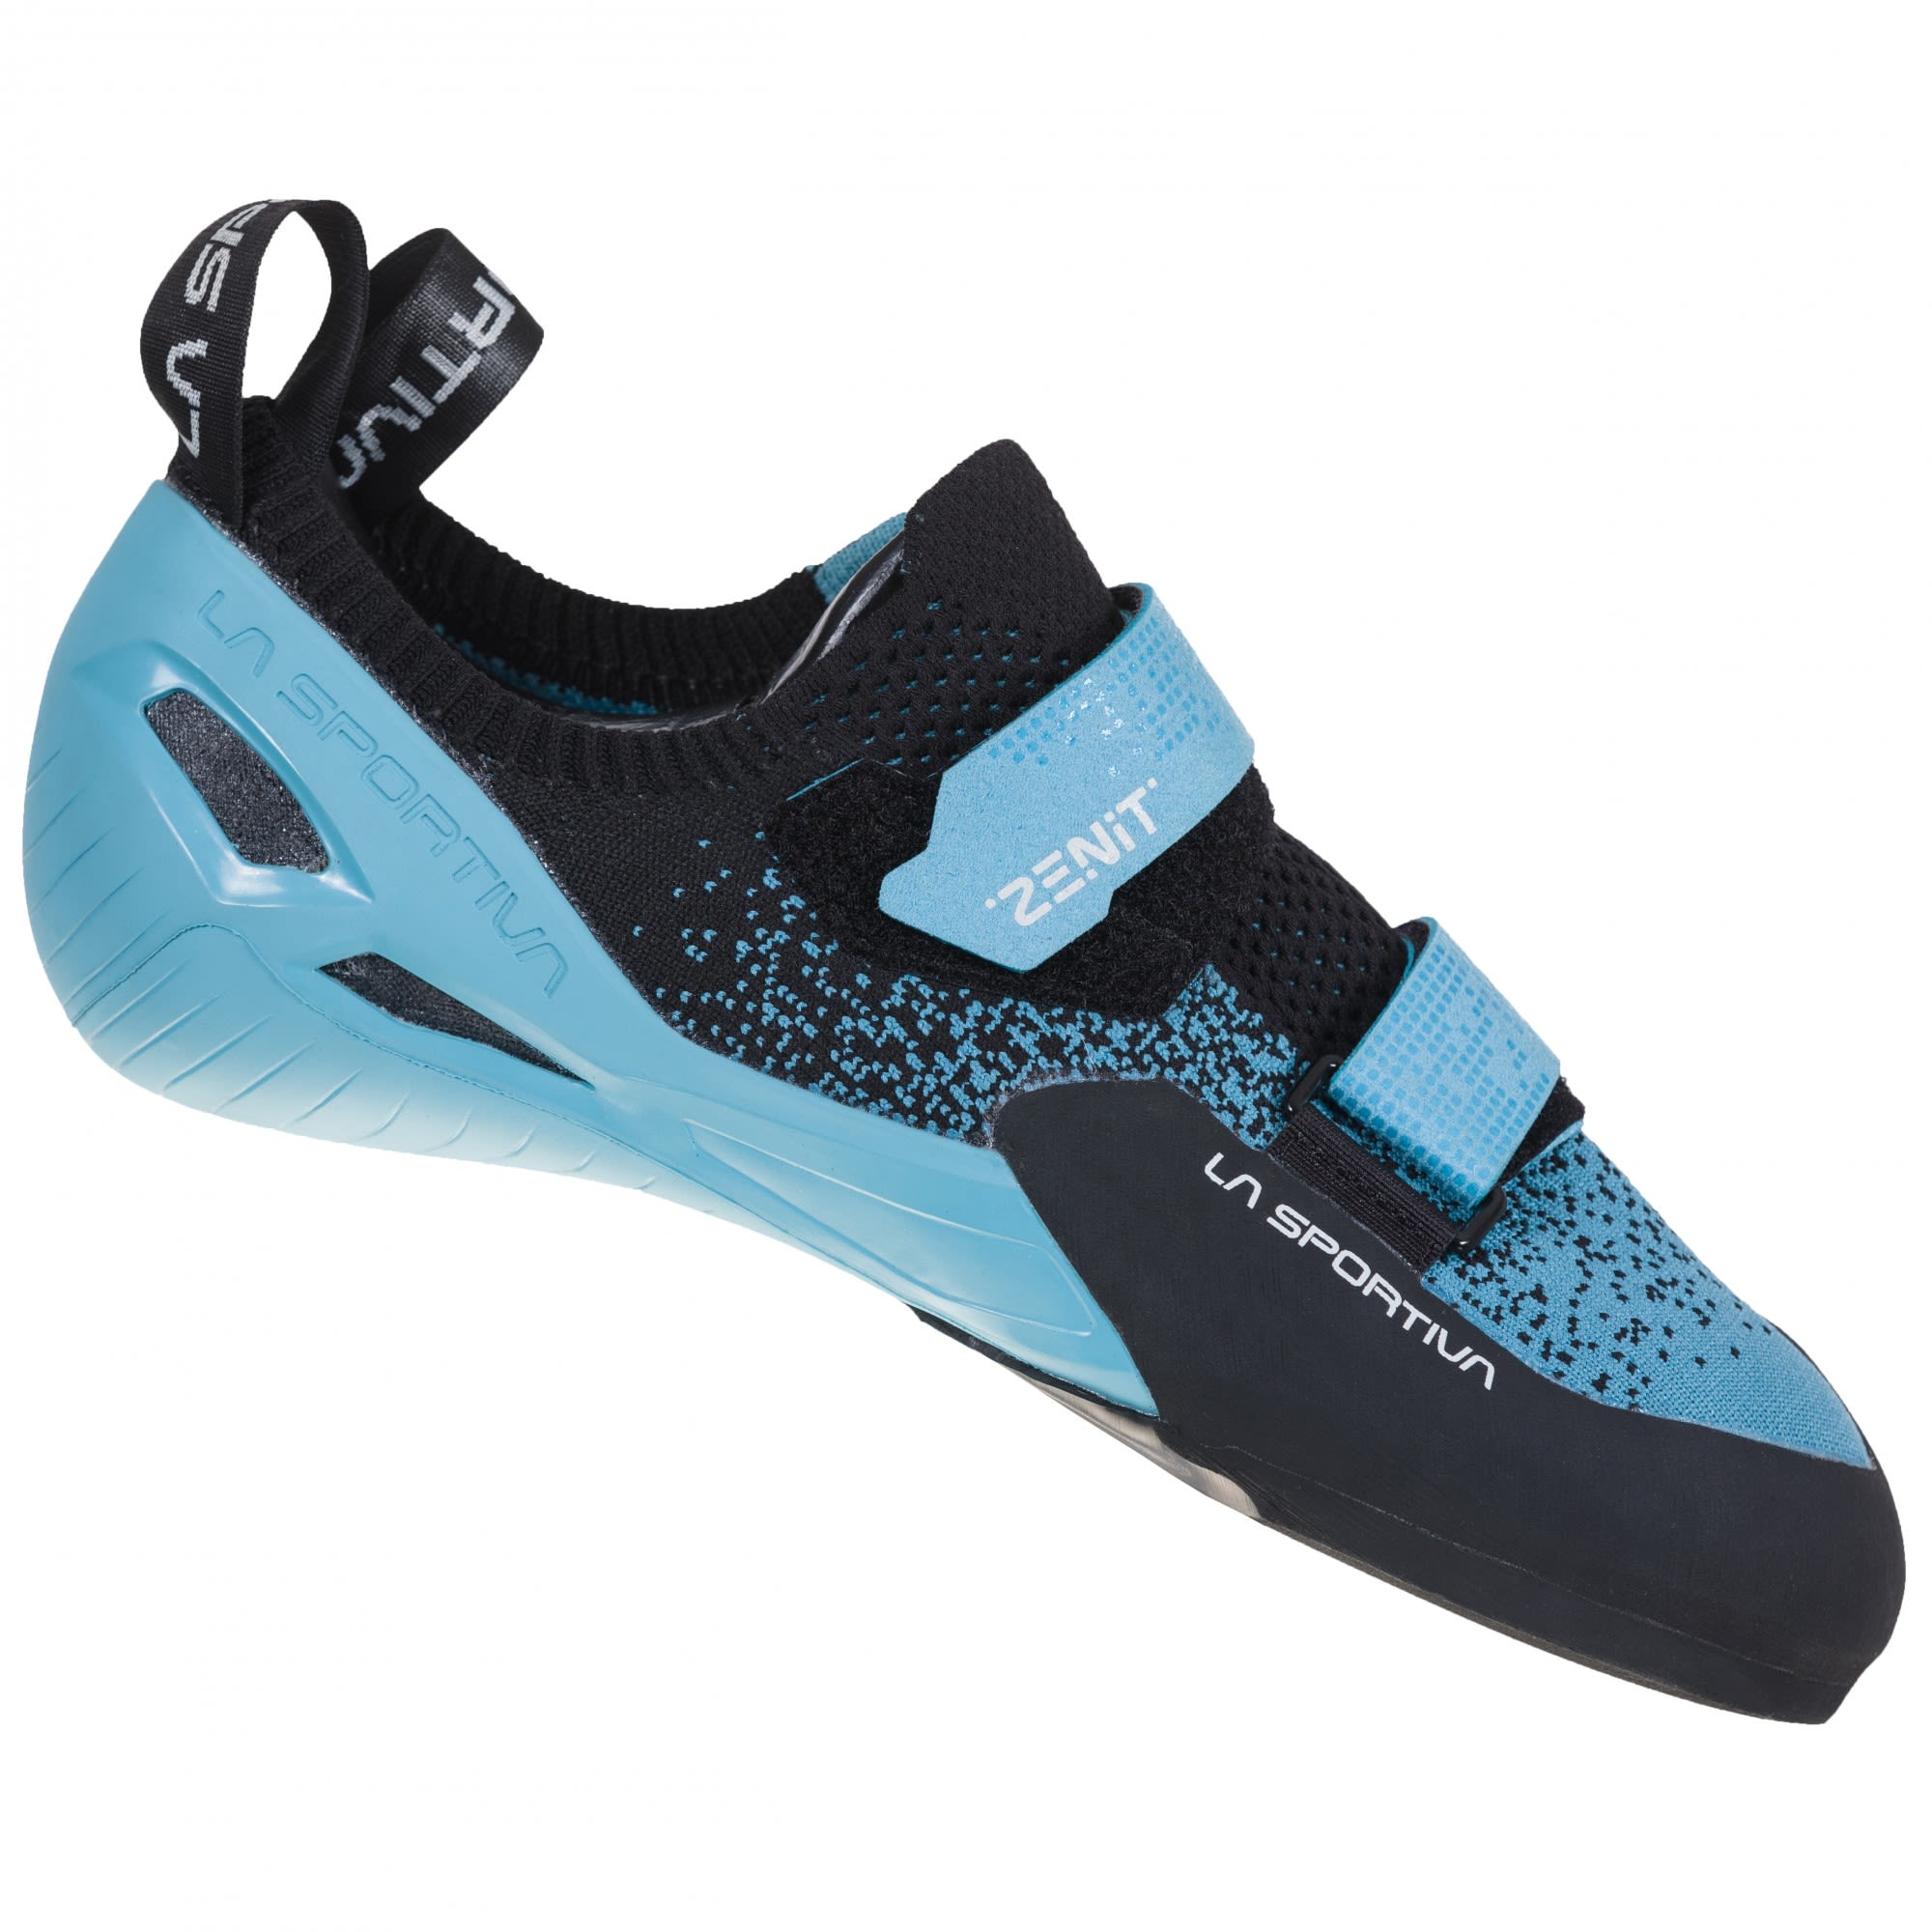 La Sportiva Bequemer atmungsaktiver Damen Kletterschuh Pacific Blue - Black